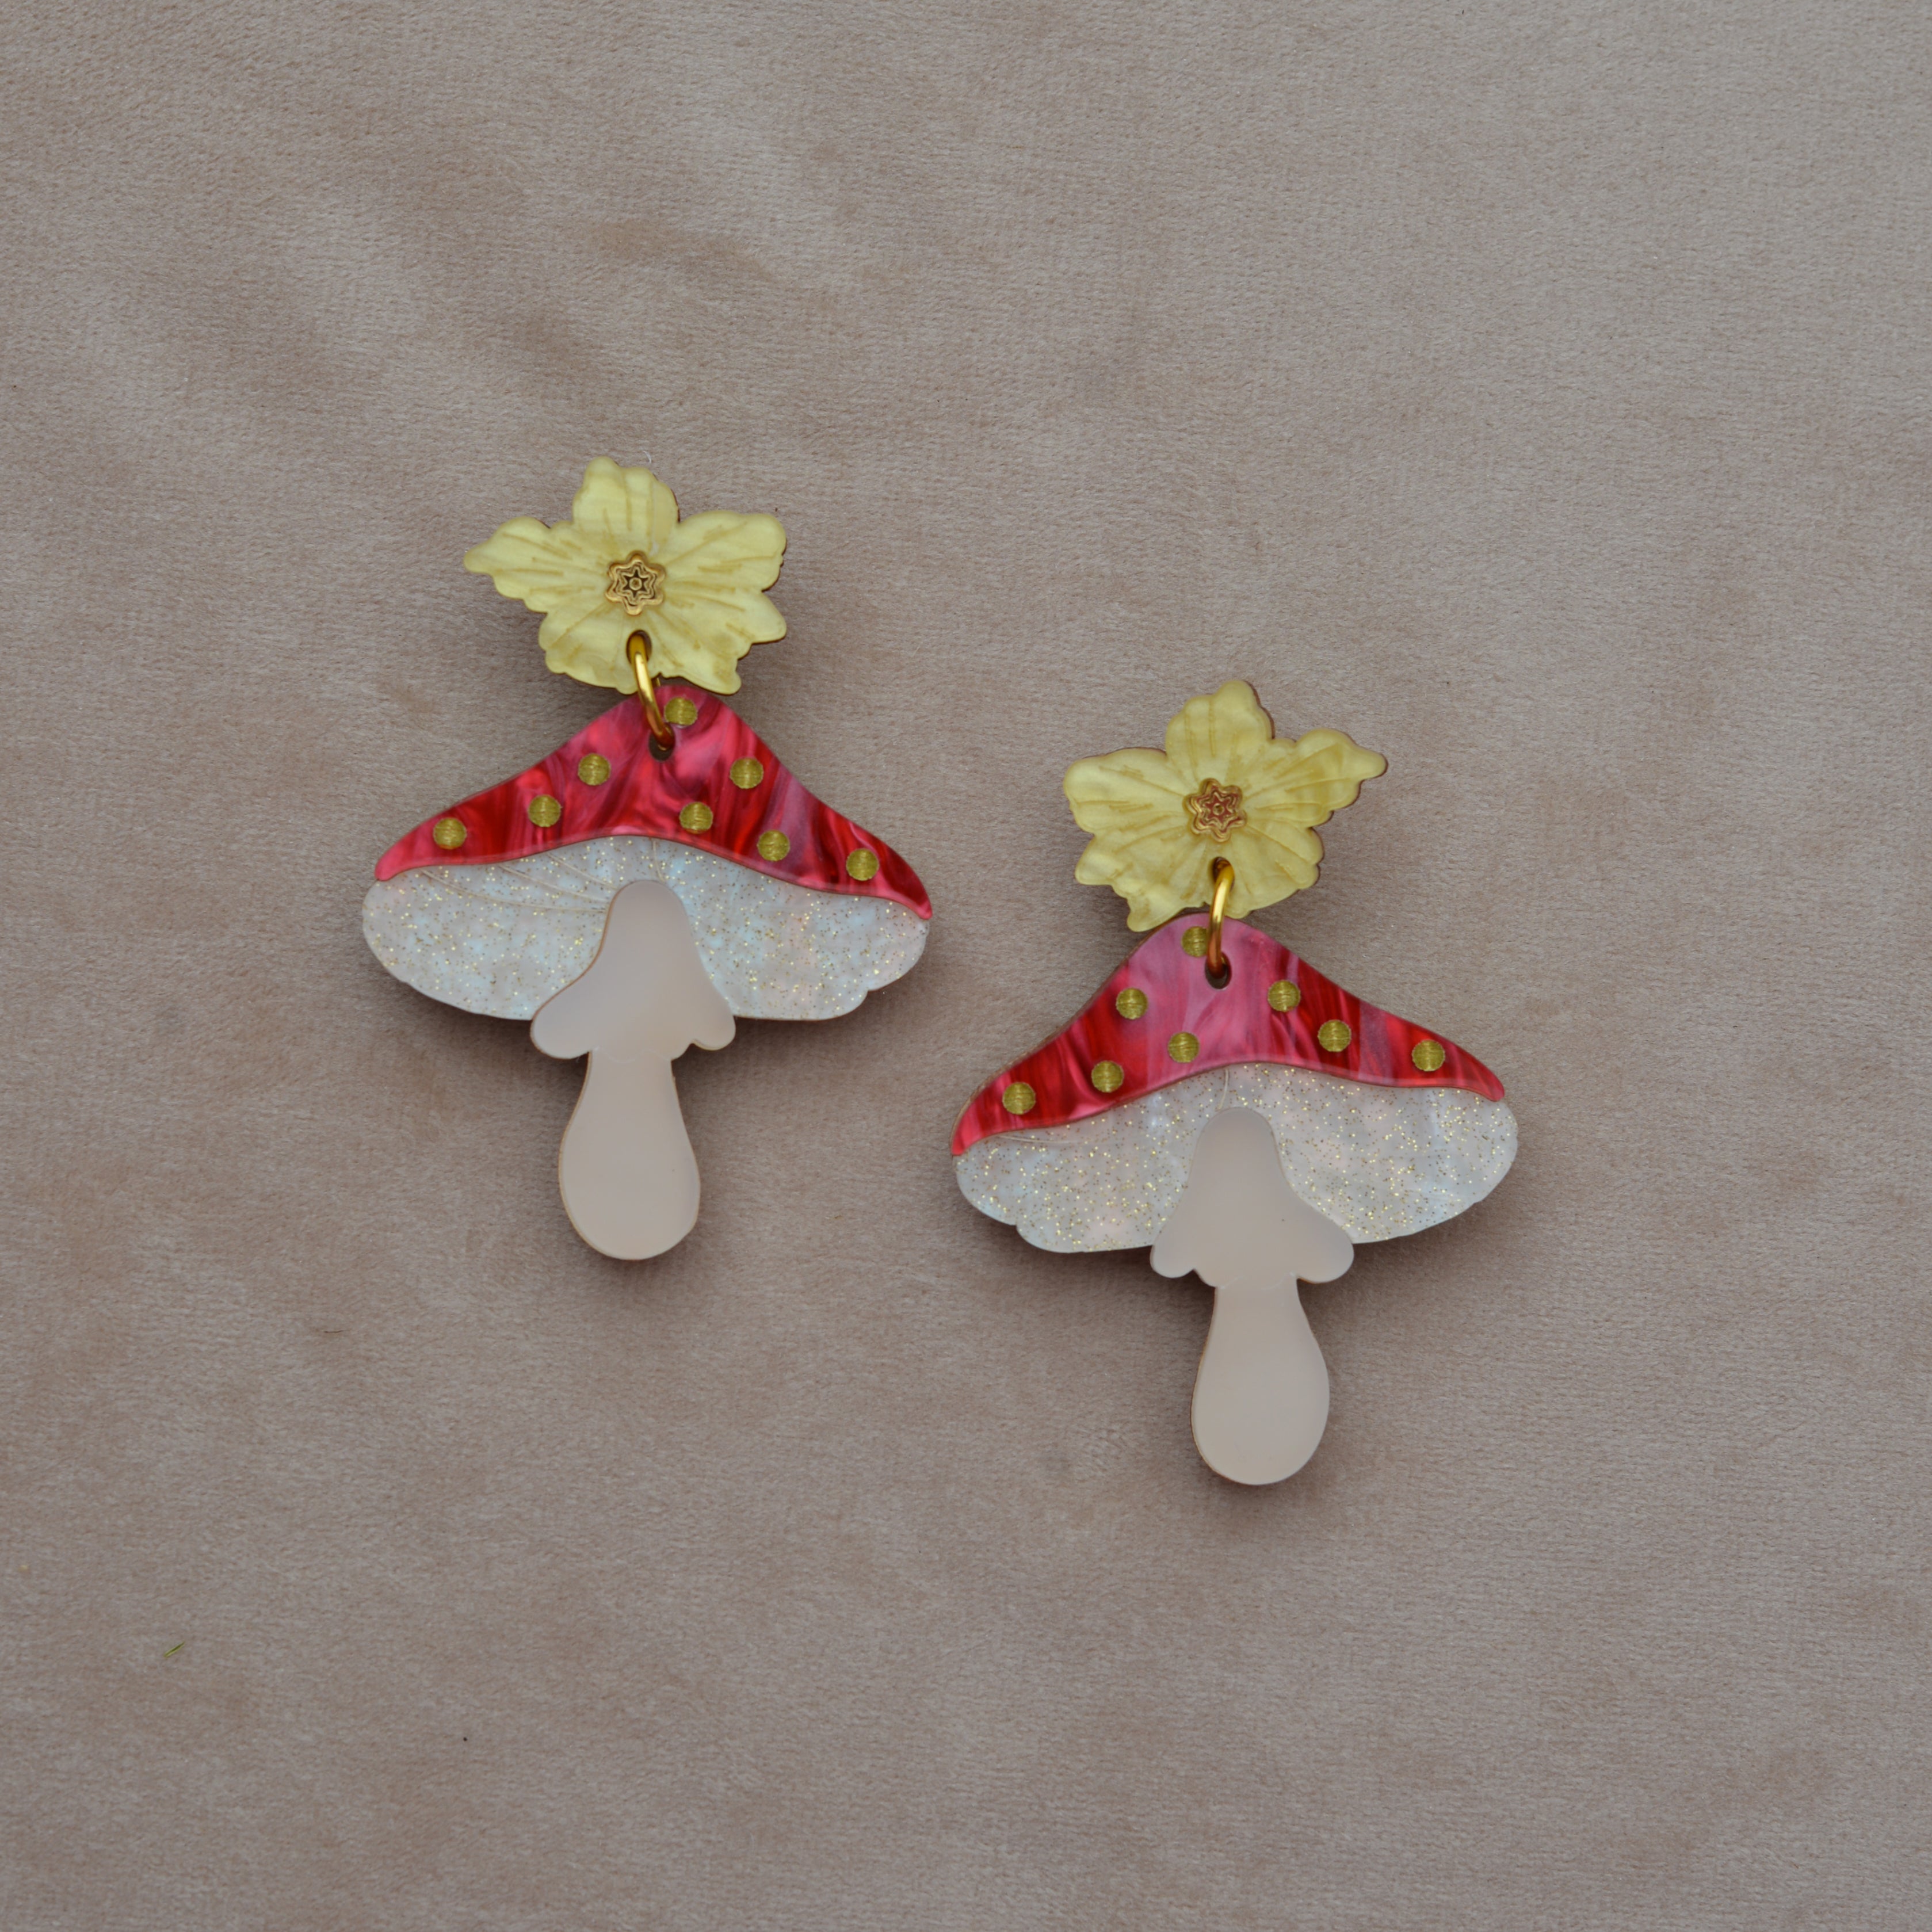 Statement Mushroom/Toadstool Earrings